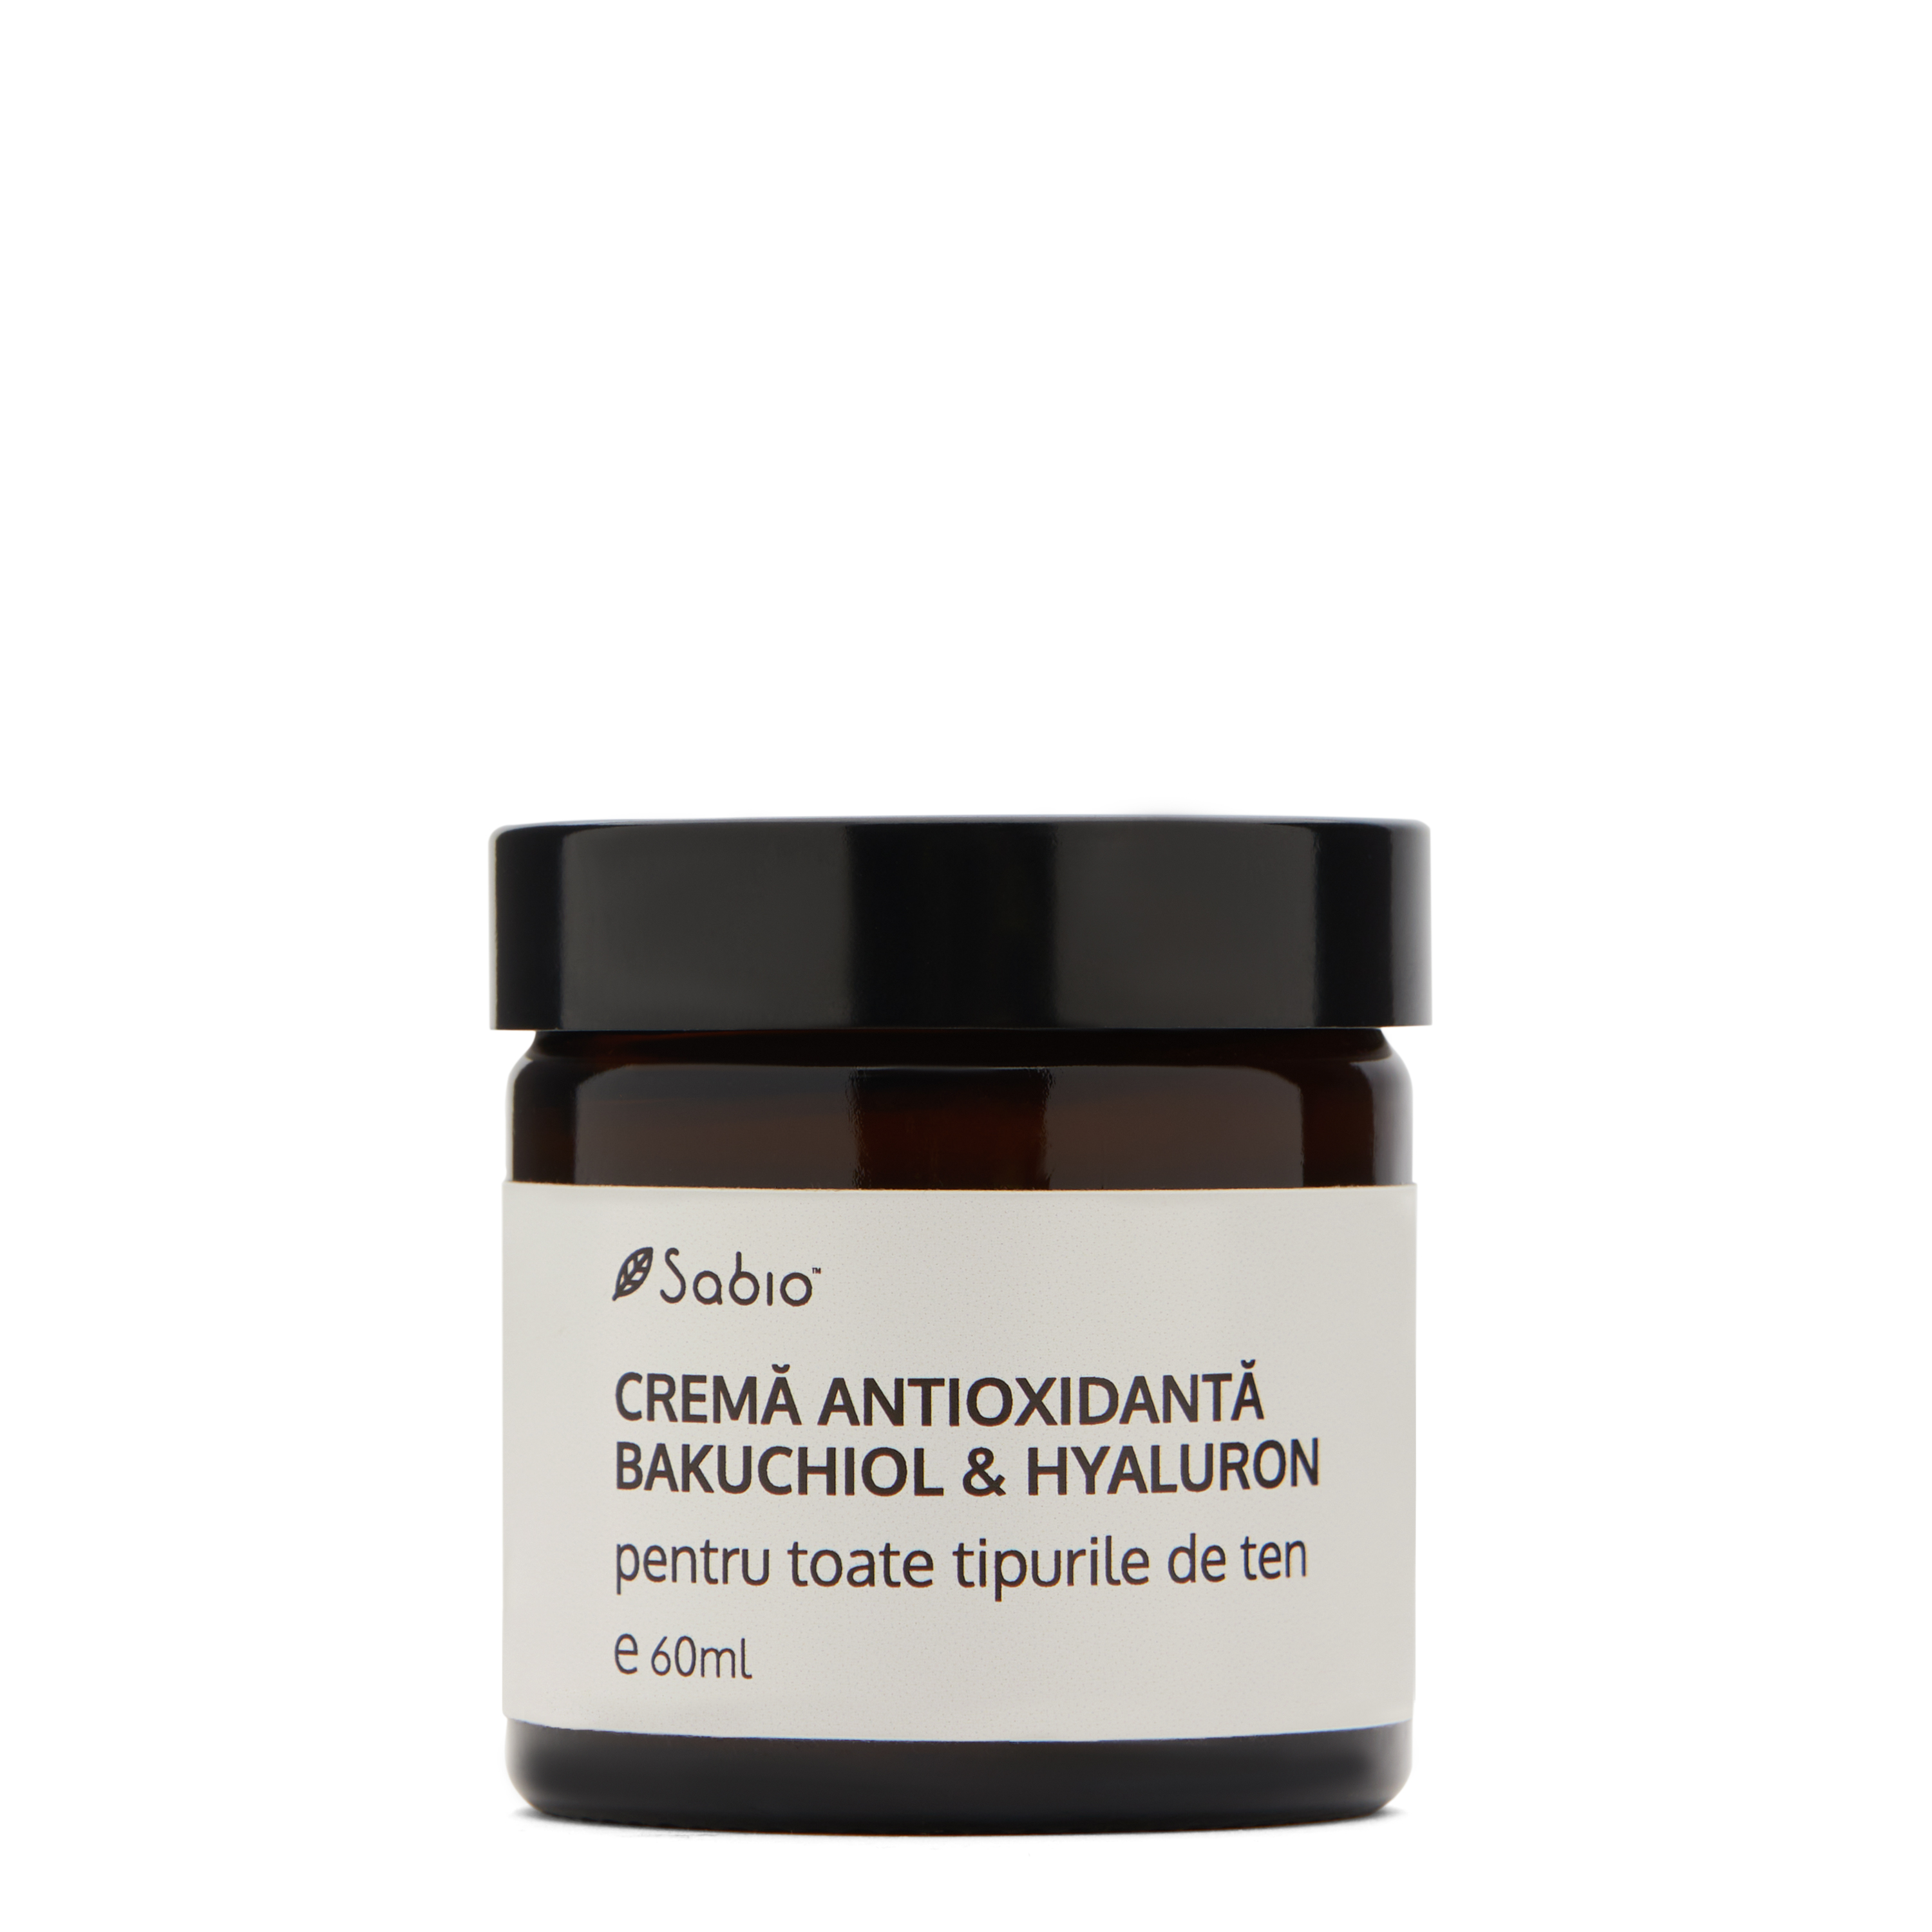 Crema antioxidanta, Bakuchiol & Hyaluron, 60ml, Sabio